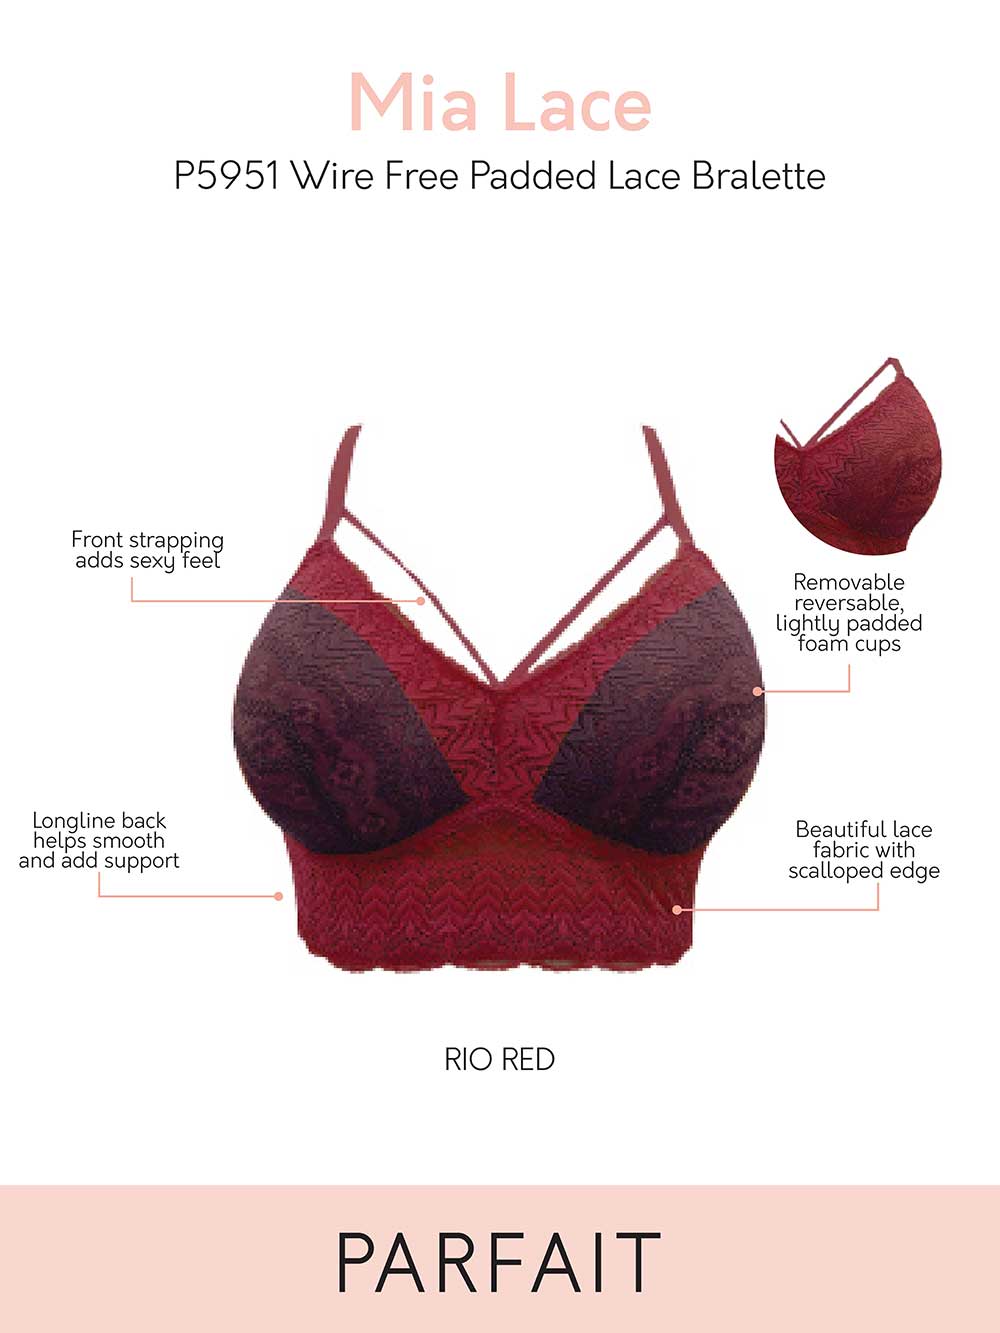 Parfait Bras Parfait Mia Lace Wire-free Padded Lace Bralette - Rio Red